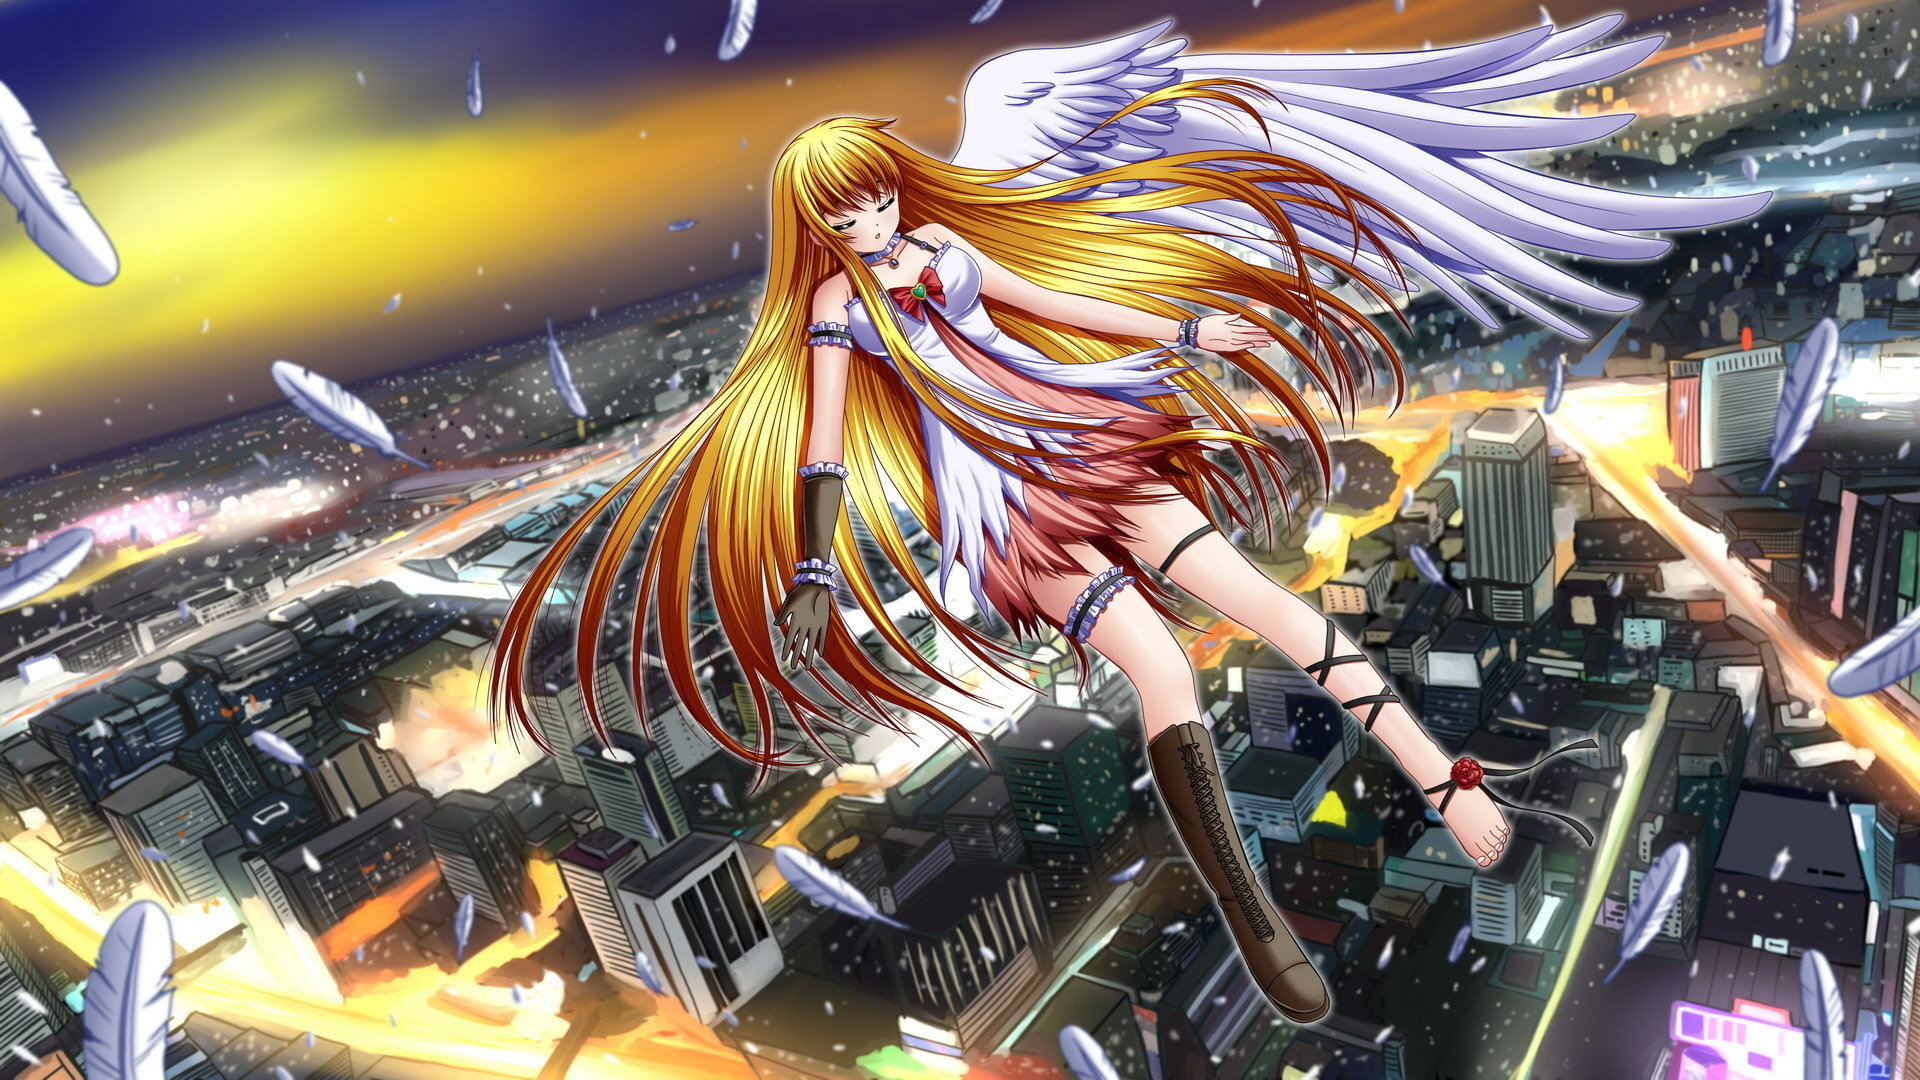 Best Angel Anime Wallpaper Id - High Quality Anime Wallpaper Hd 1080p - HD Wallpaper 